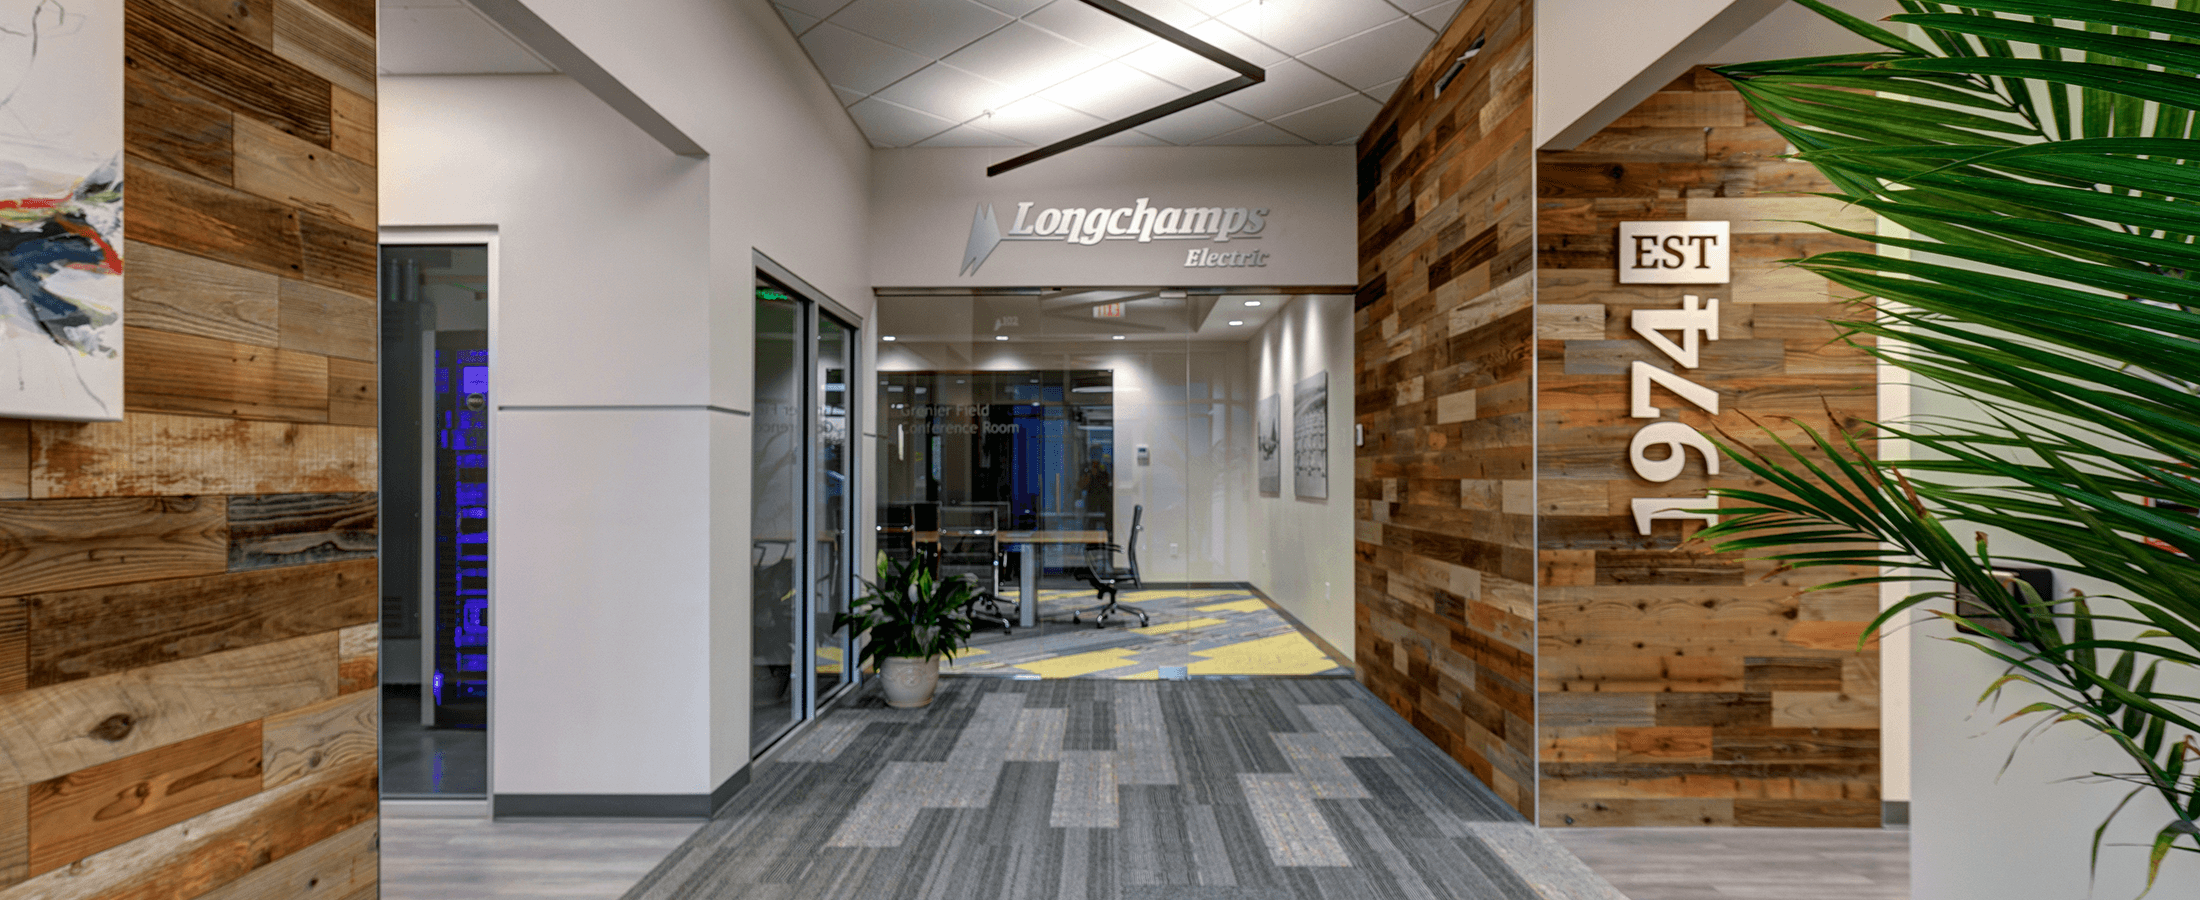 longchamps-electric-office-building